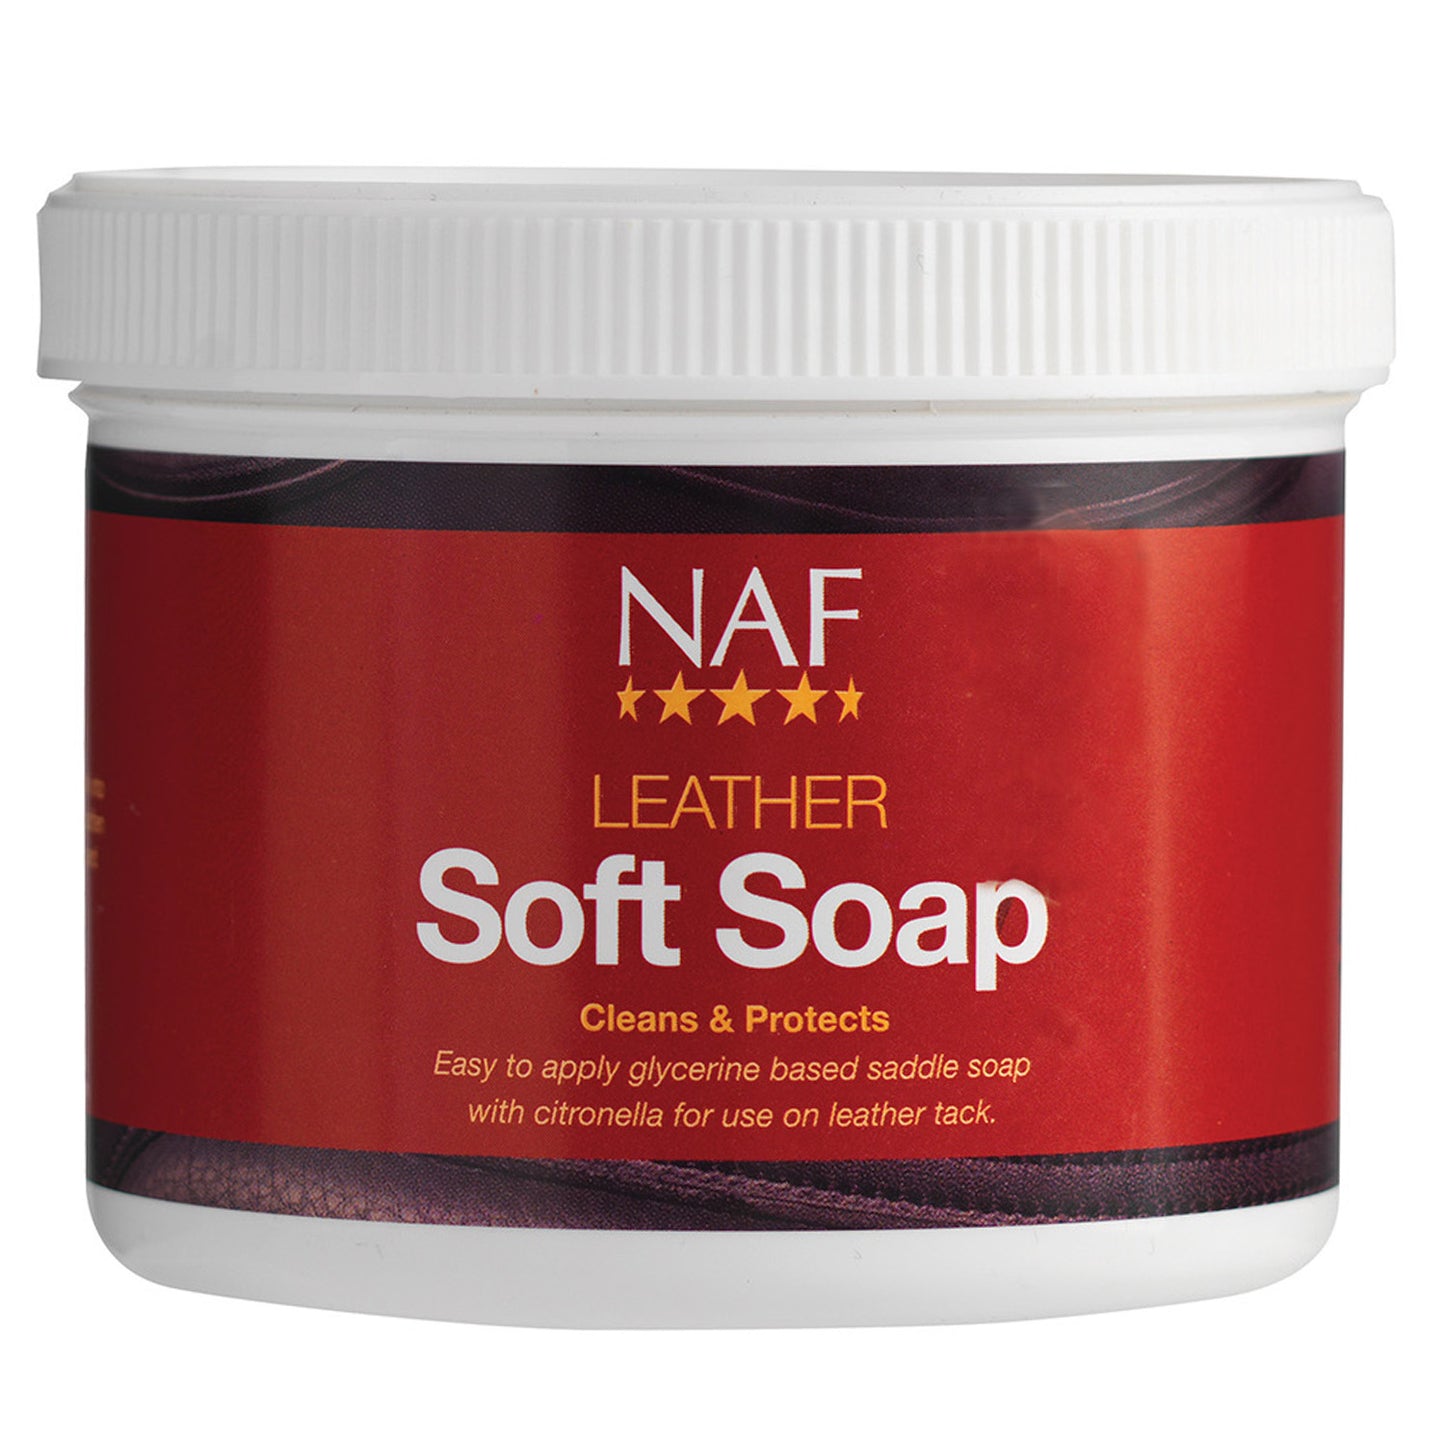 NAF Leather Soft Soap 250g